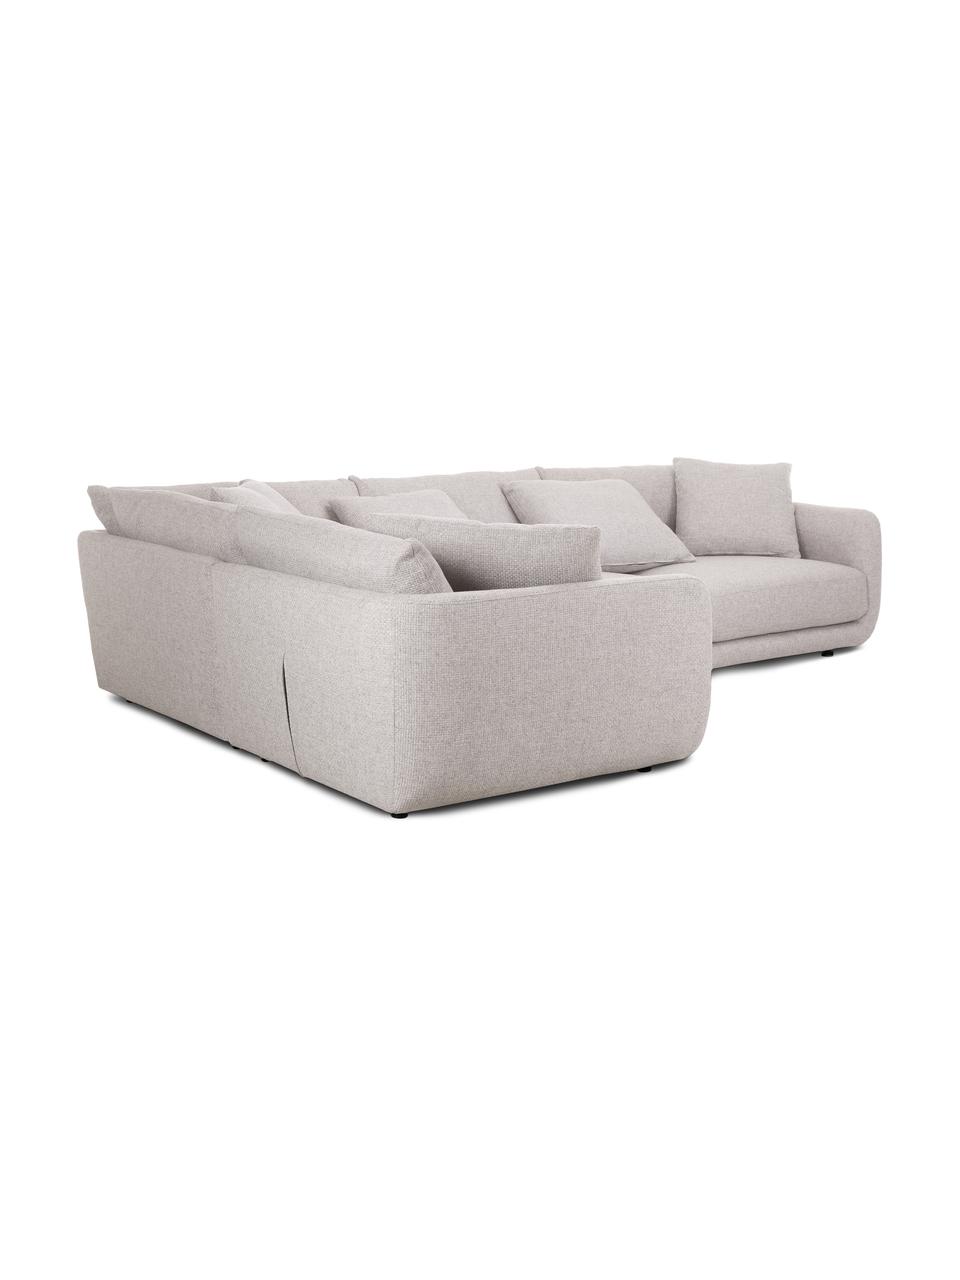 Canapé d'angle modulable gris clair Jasmin, Tissu gris clair, larg. 306 x long. 84 cm